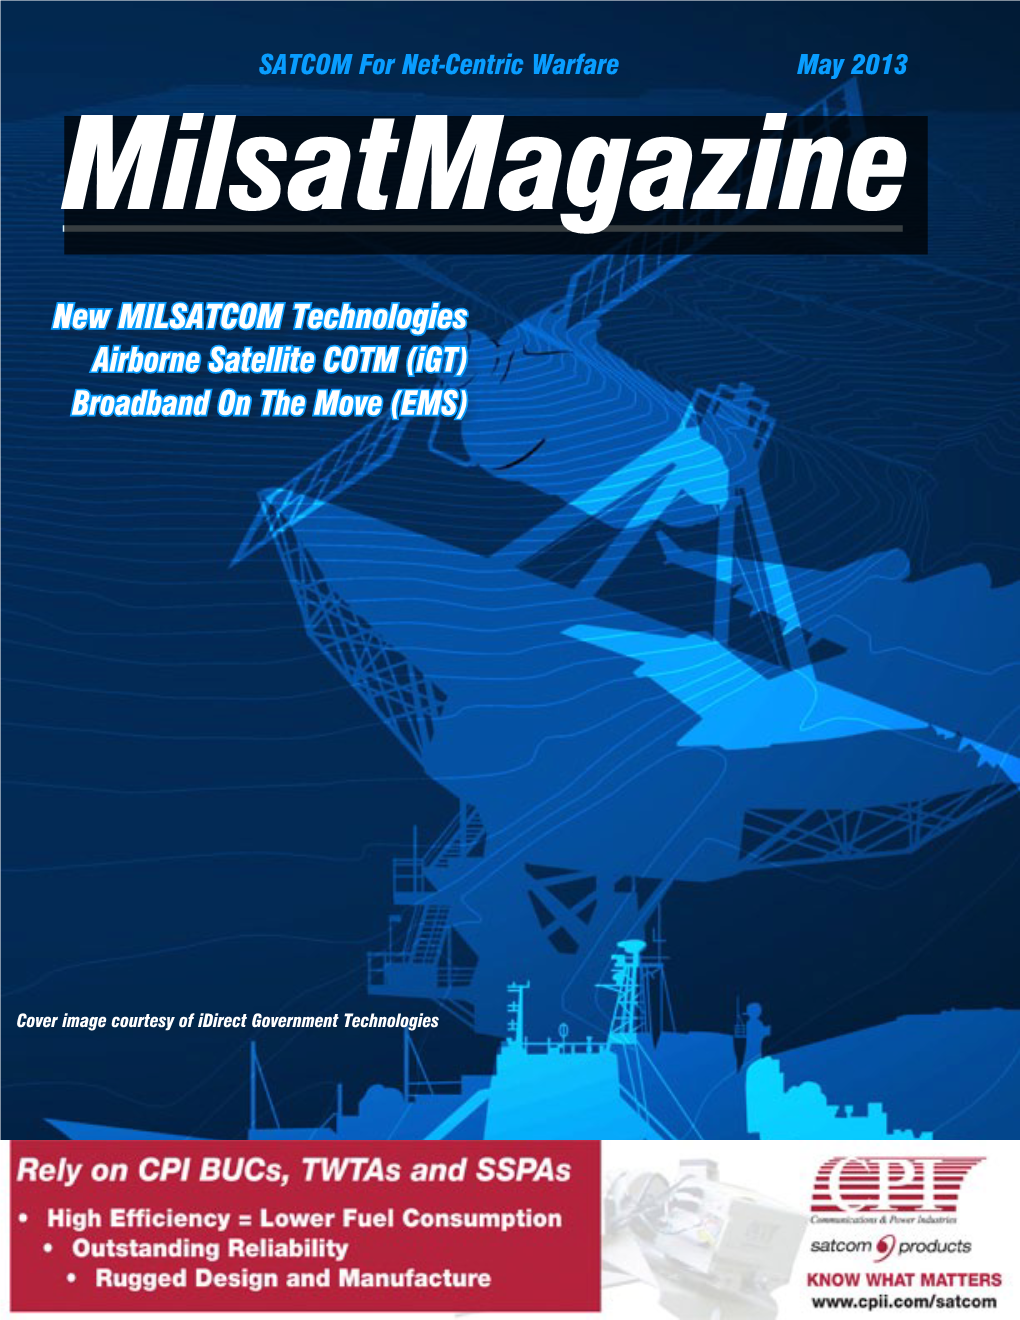 New MILSATCOM Technologies Airborne Satellite COTM (Igt) Broadband on the Move (EMS)